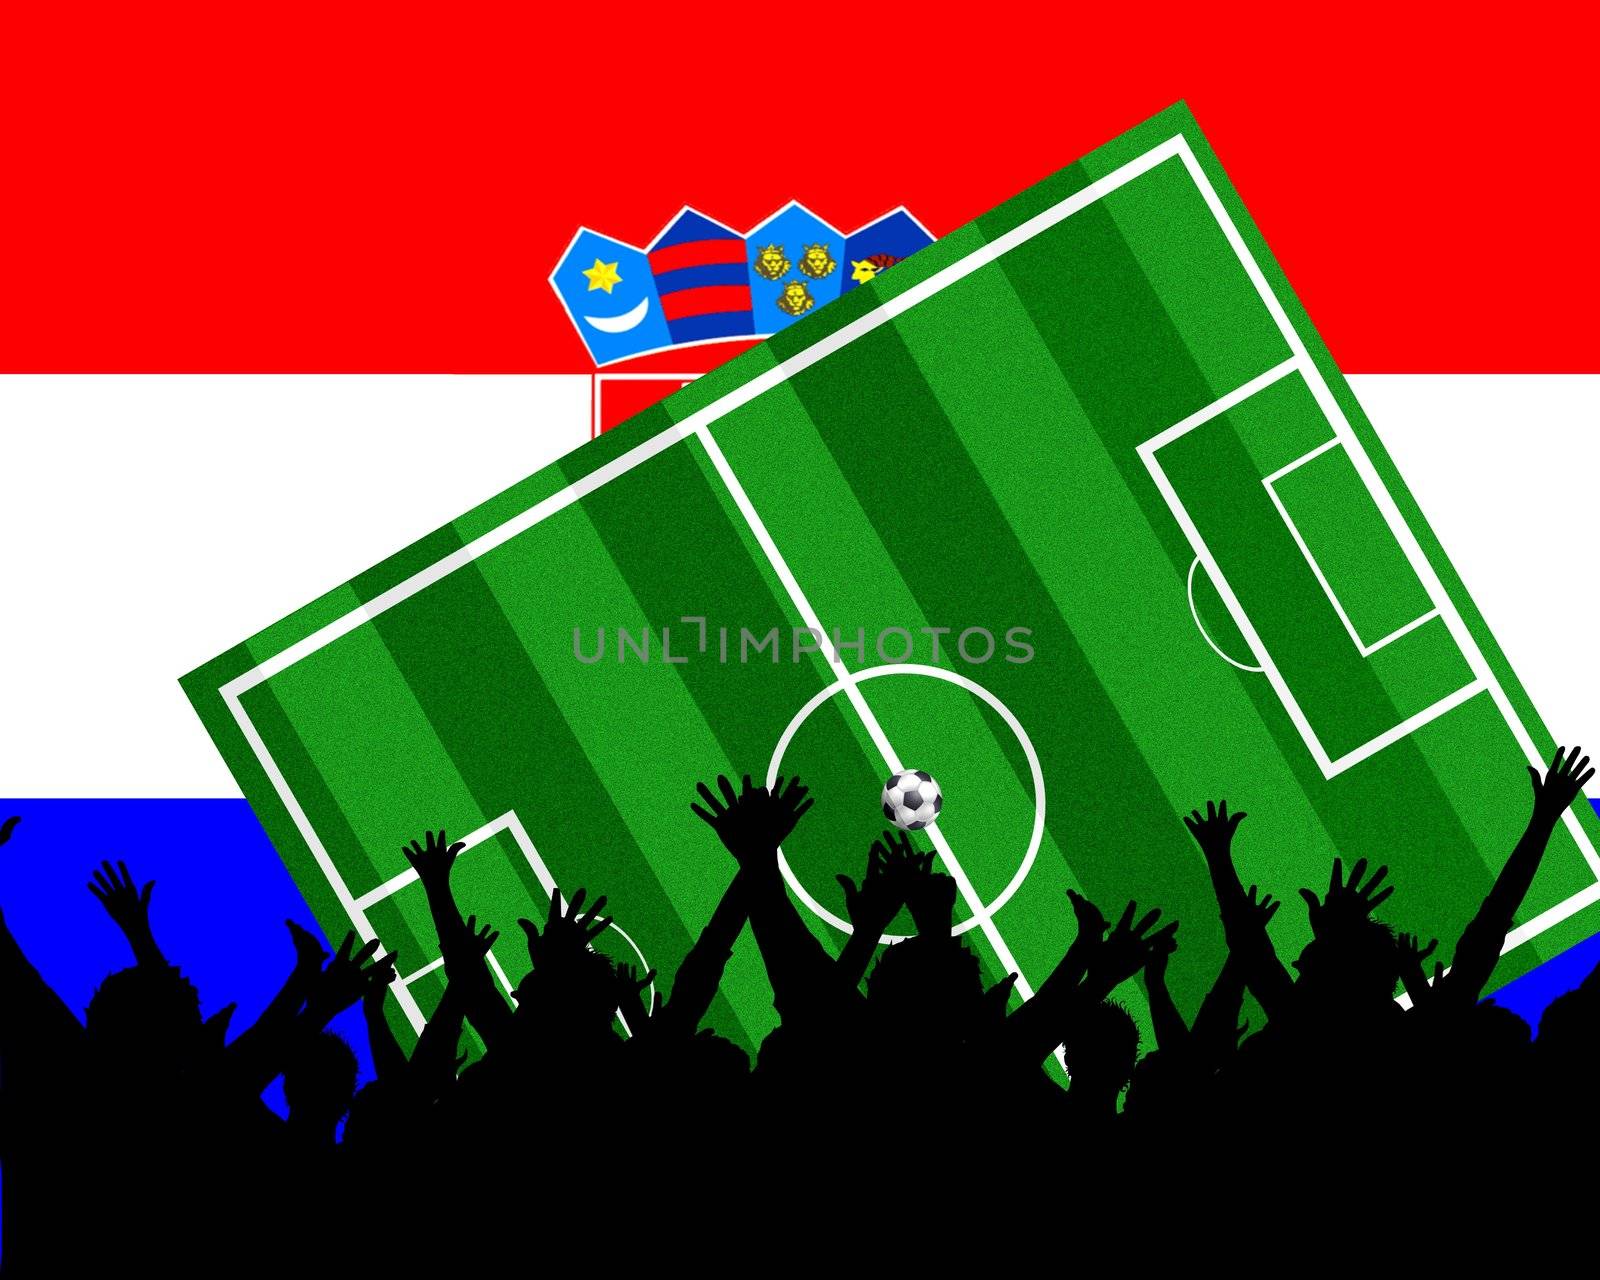 european soccer championship- team Croatia by peromarketing